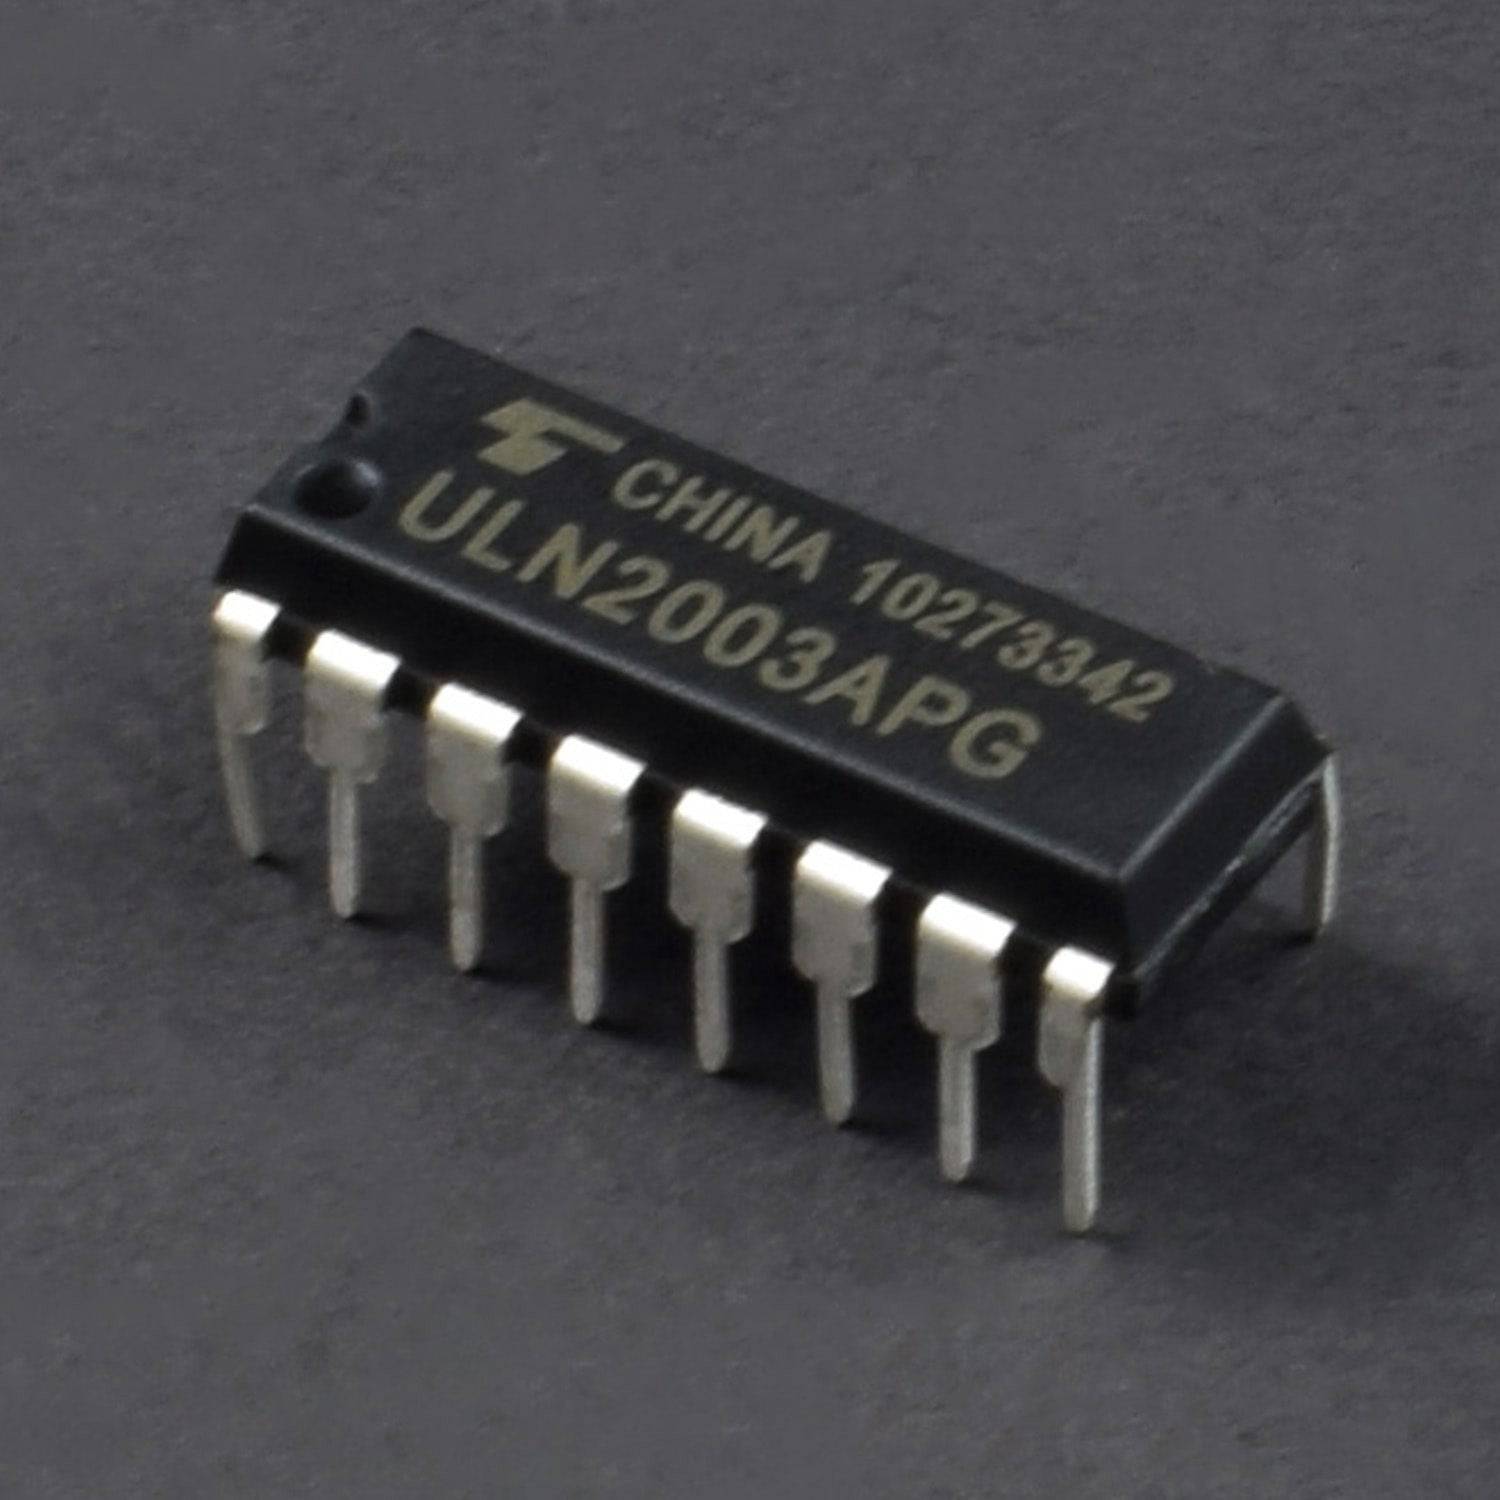 ULN2003 High-Voltage, High-Current Seven Darlington Driver Transistor Arrays For Motor Driver -RS082 - REES52